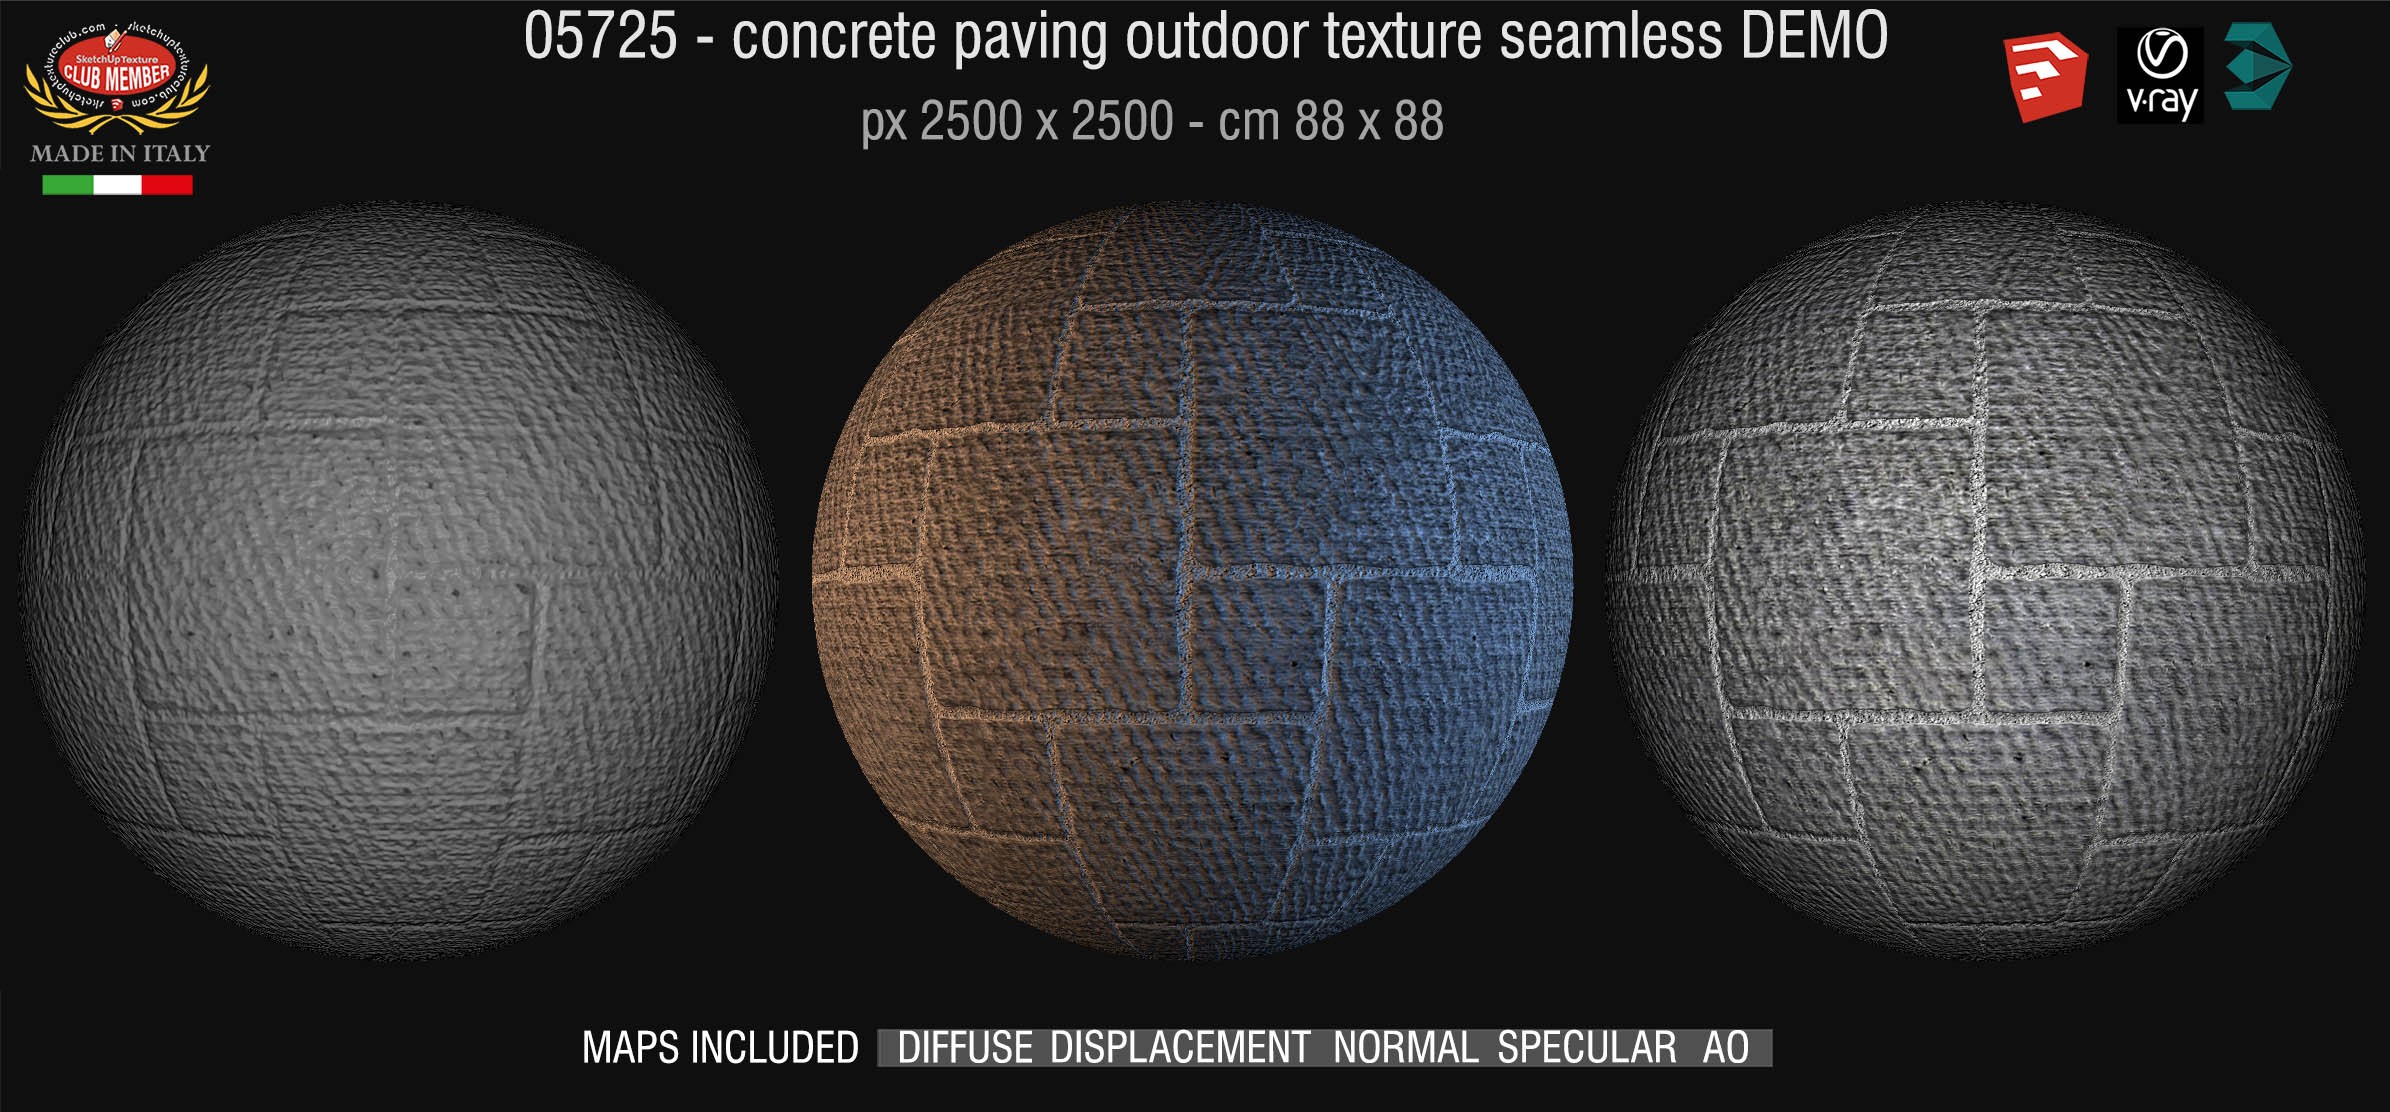 05725 HR Paving outdoor concrete regular block texture + maps DEMO